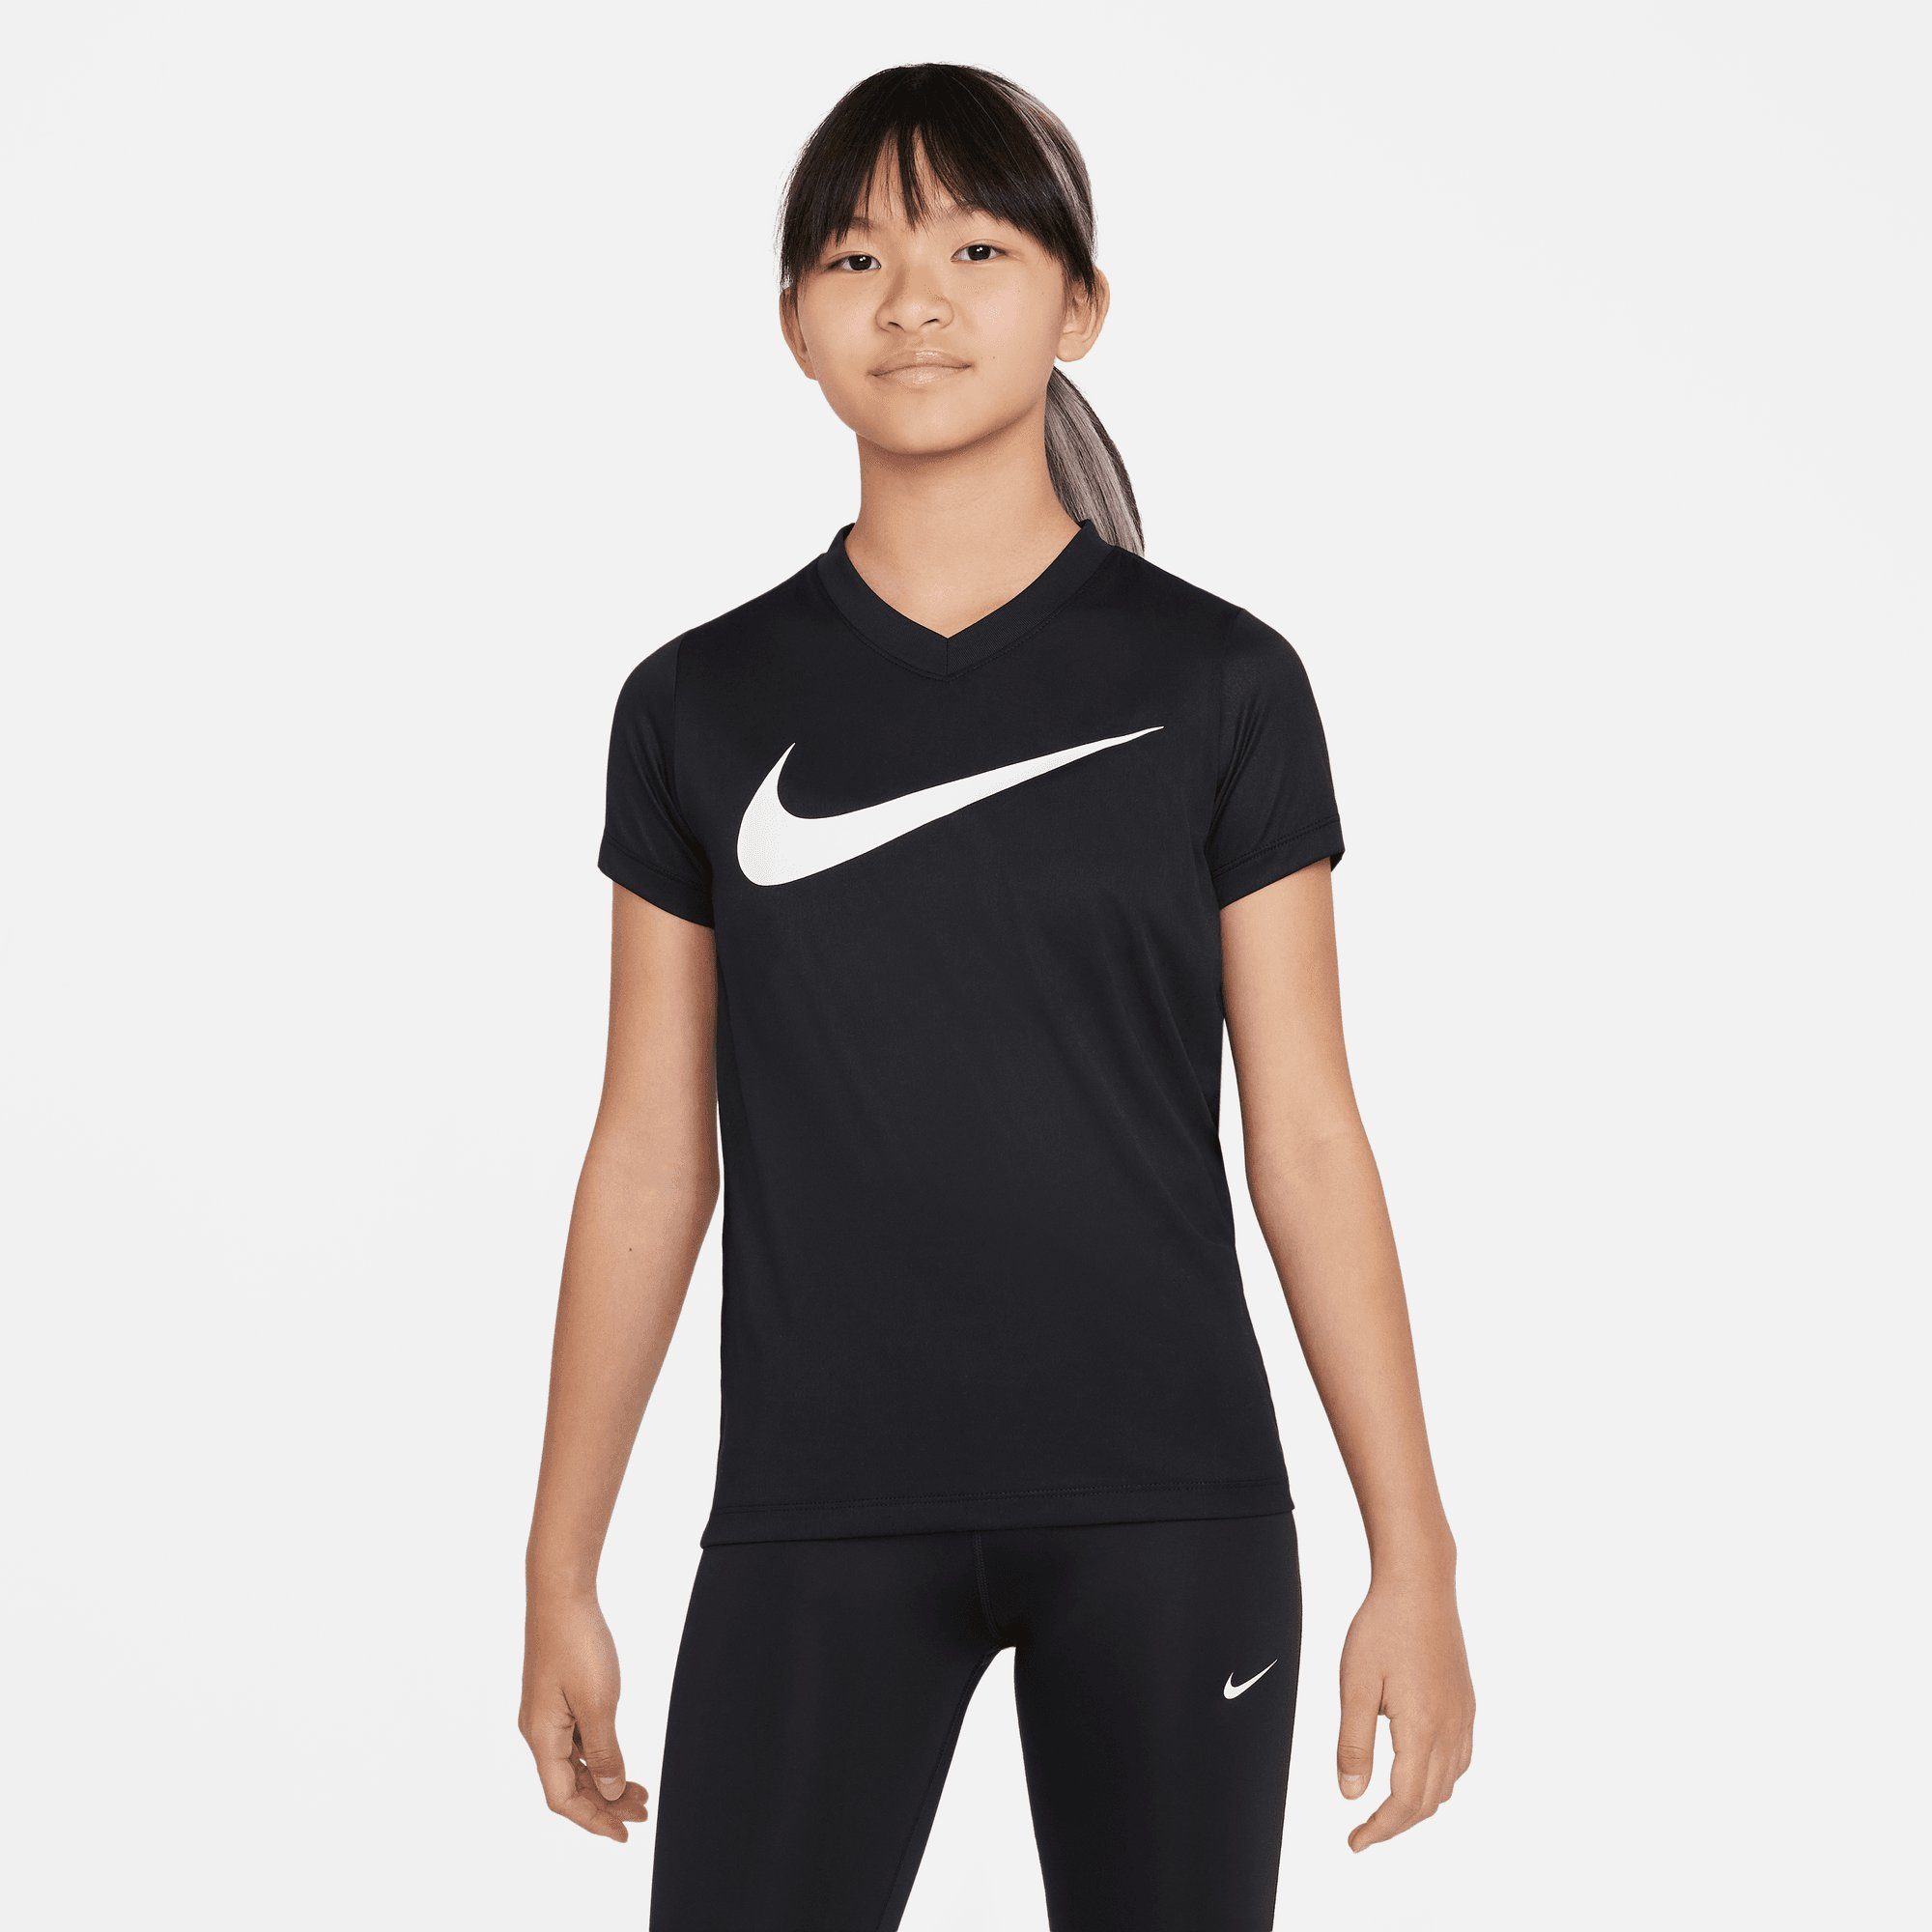 Nike LEGEND BIG BLACK/WHITE T-SHIRT TRAINING (GIRLS) DRI-FIT KIDS' Trainingsshirt V-NECK